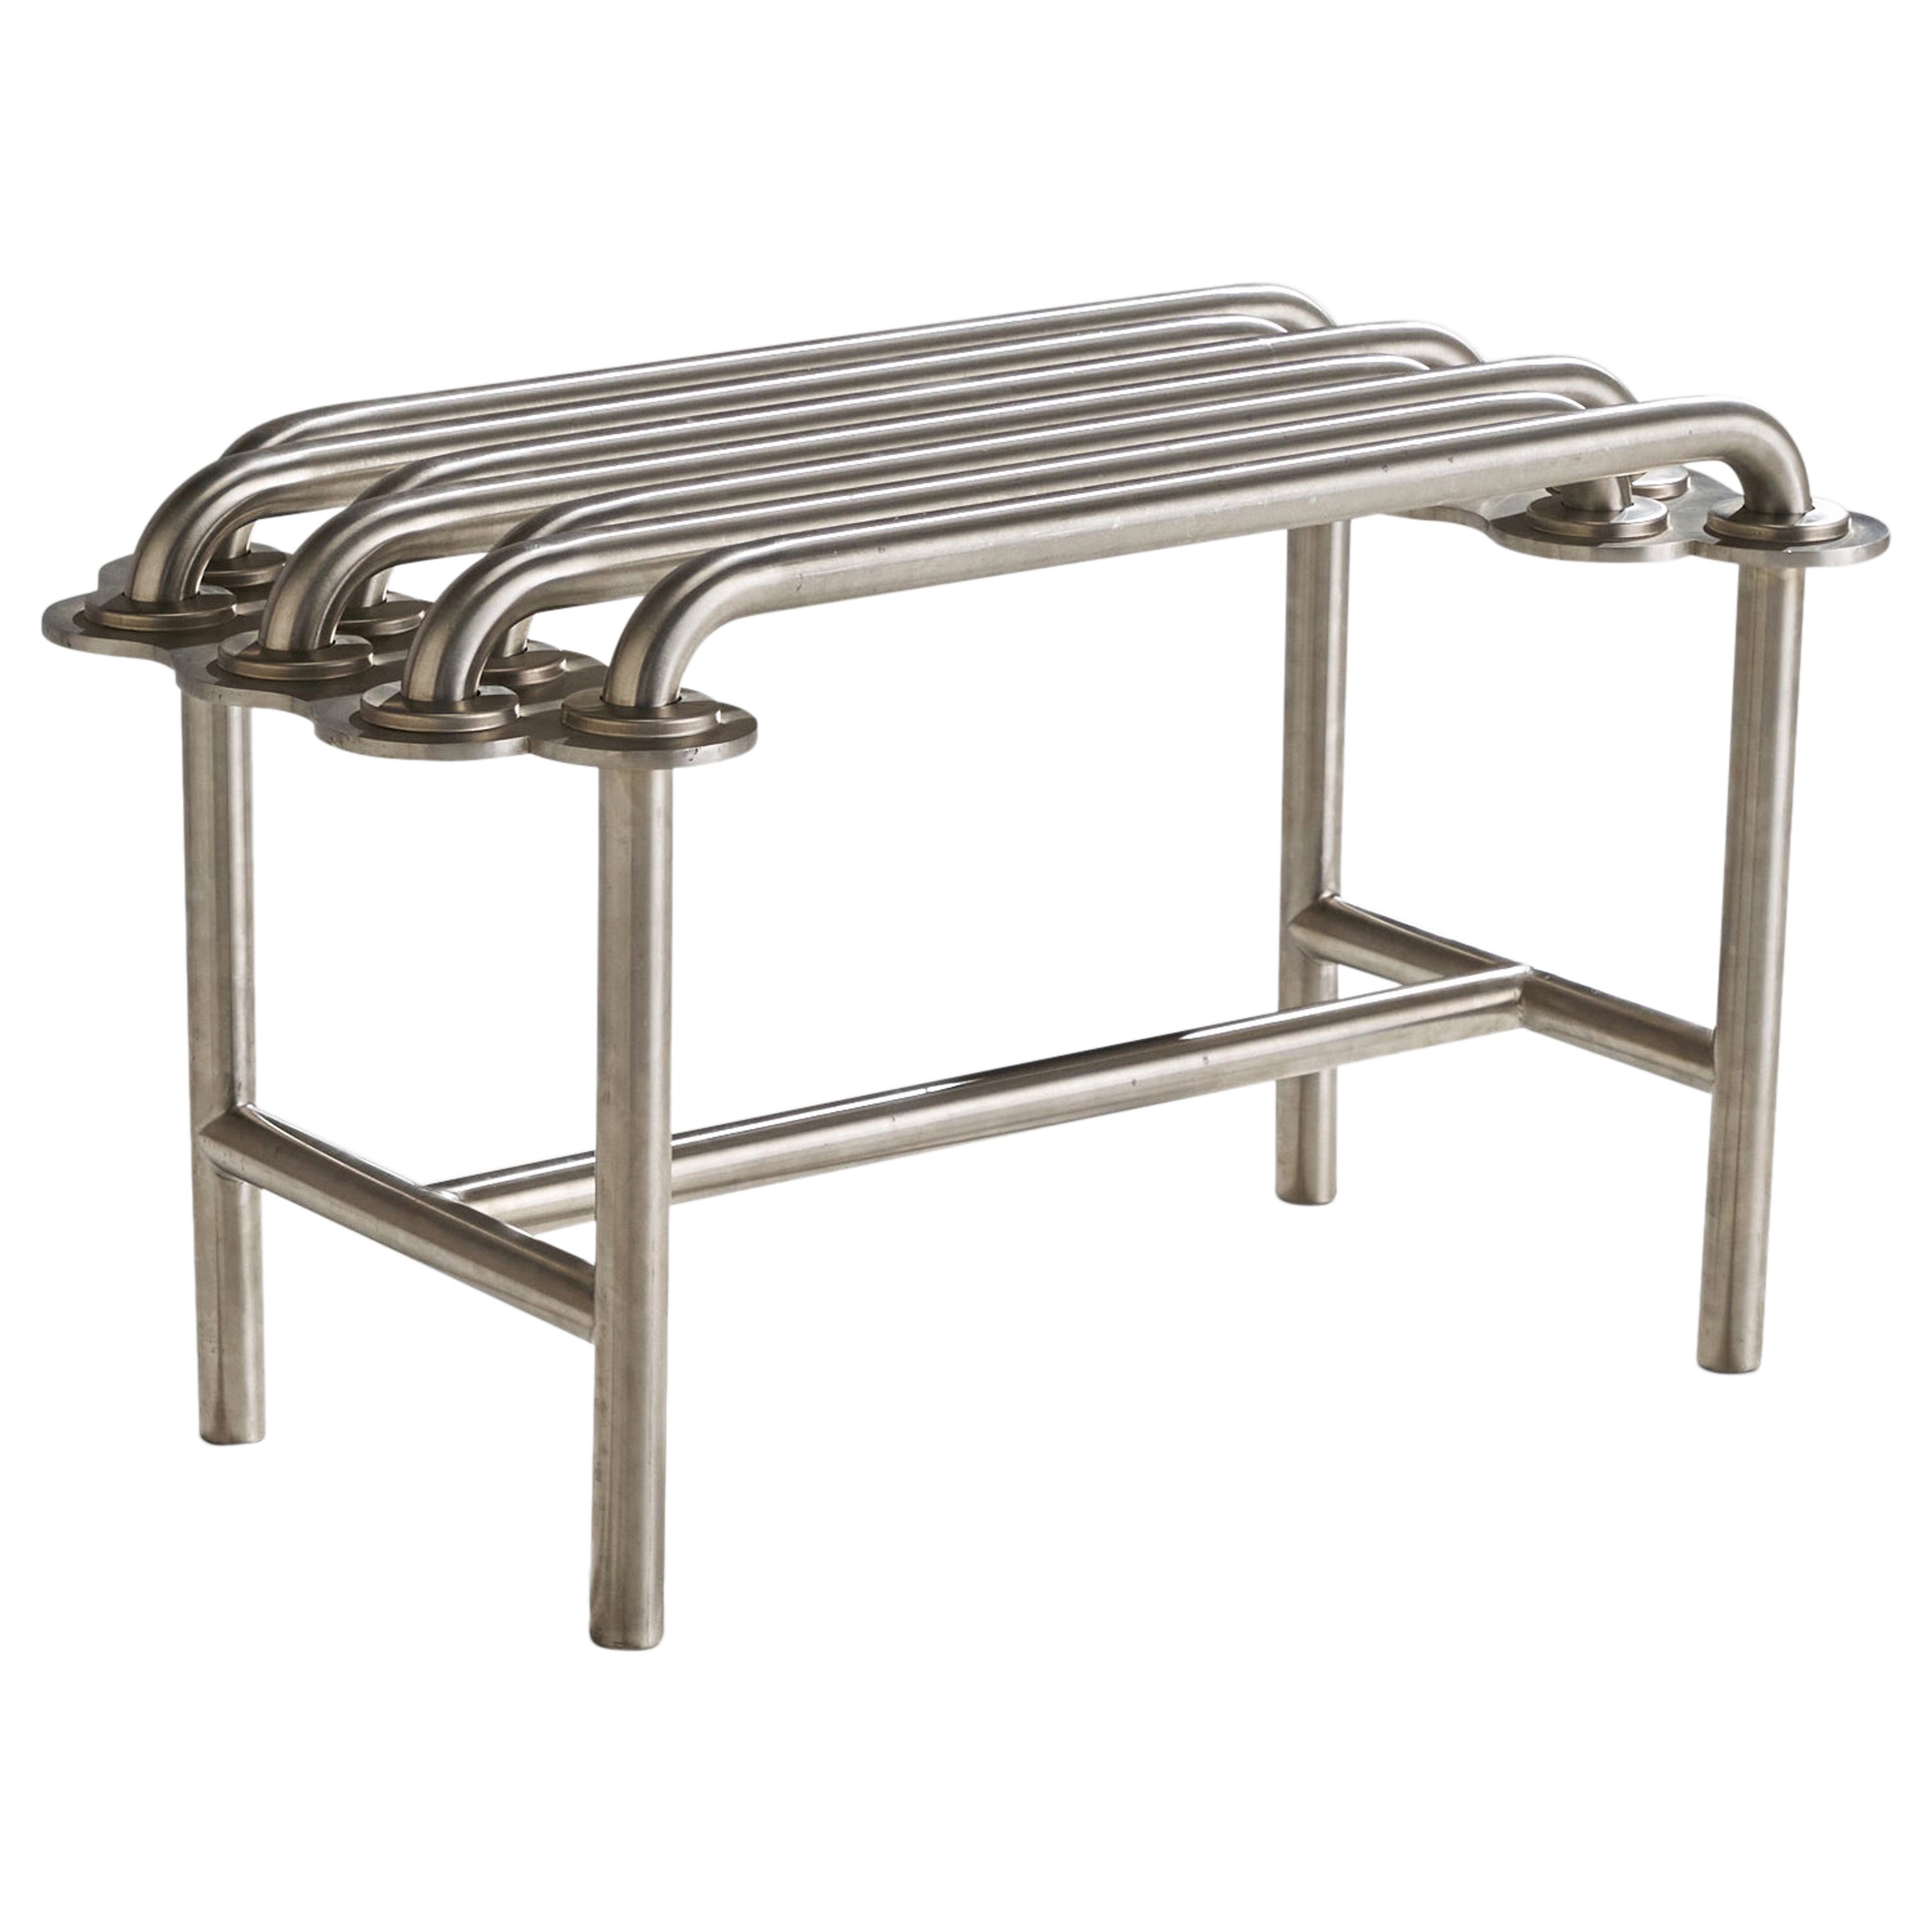 Jim Drain, Unique Bench, Stainless Steel, Aluminium, USA 2000s